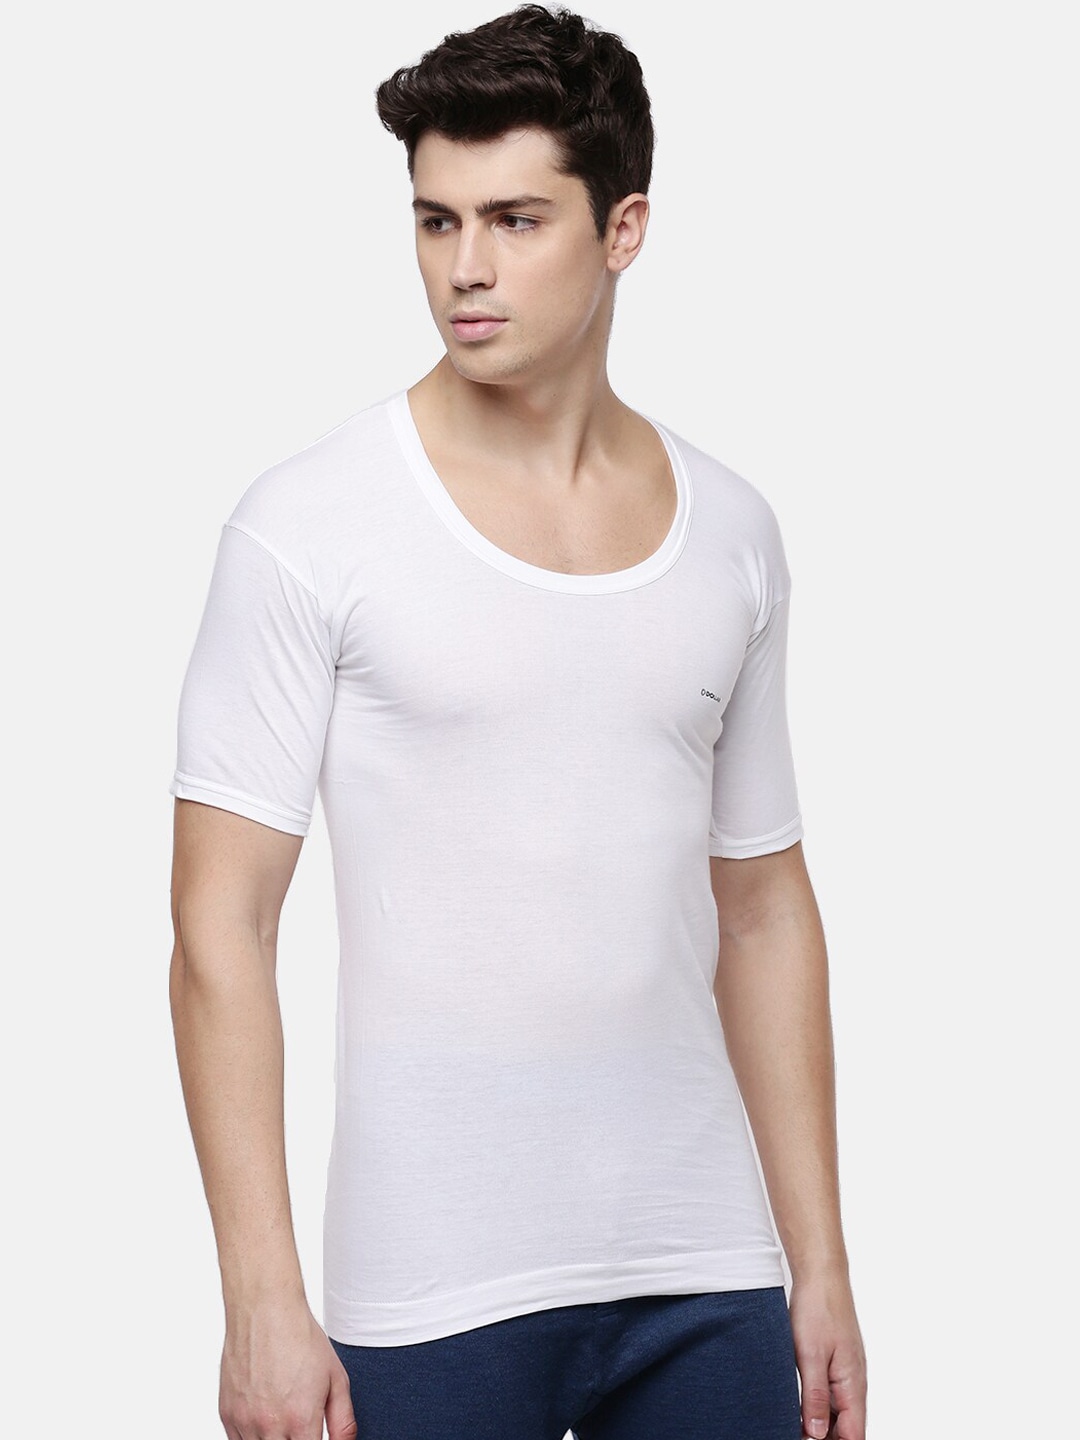 Clothing Innerwear Vests | Dollar Men Pack Of 3 White Solid Innerwear Vests MLHVE-02-PO3 - VJ87506